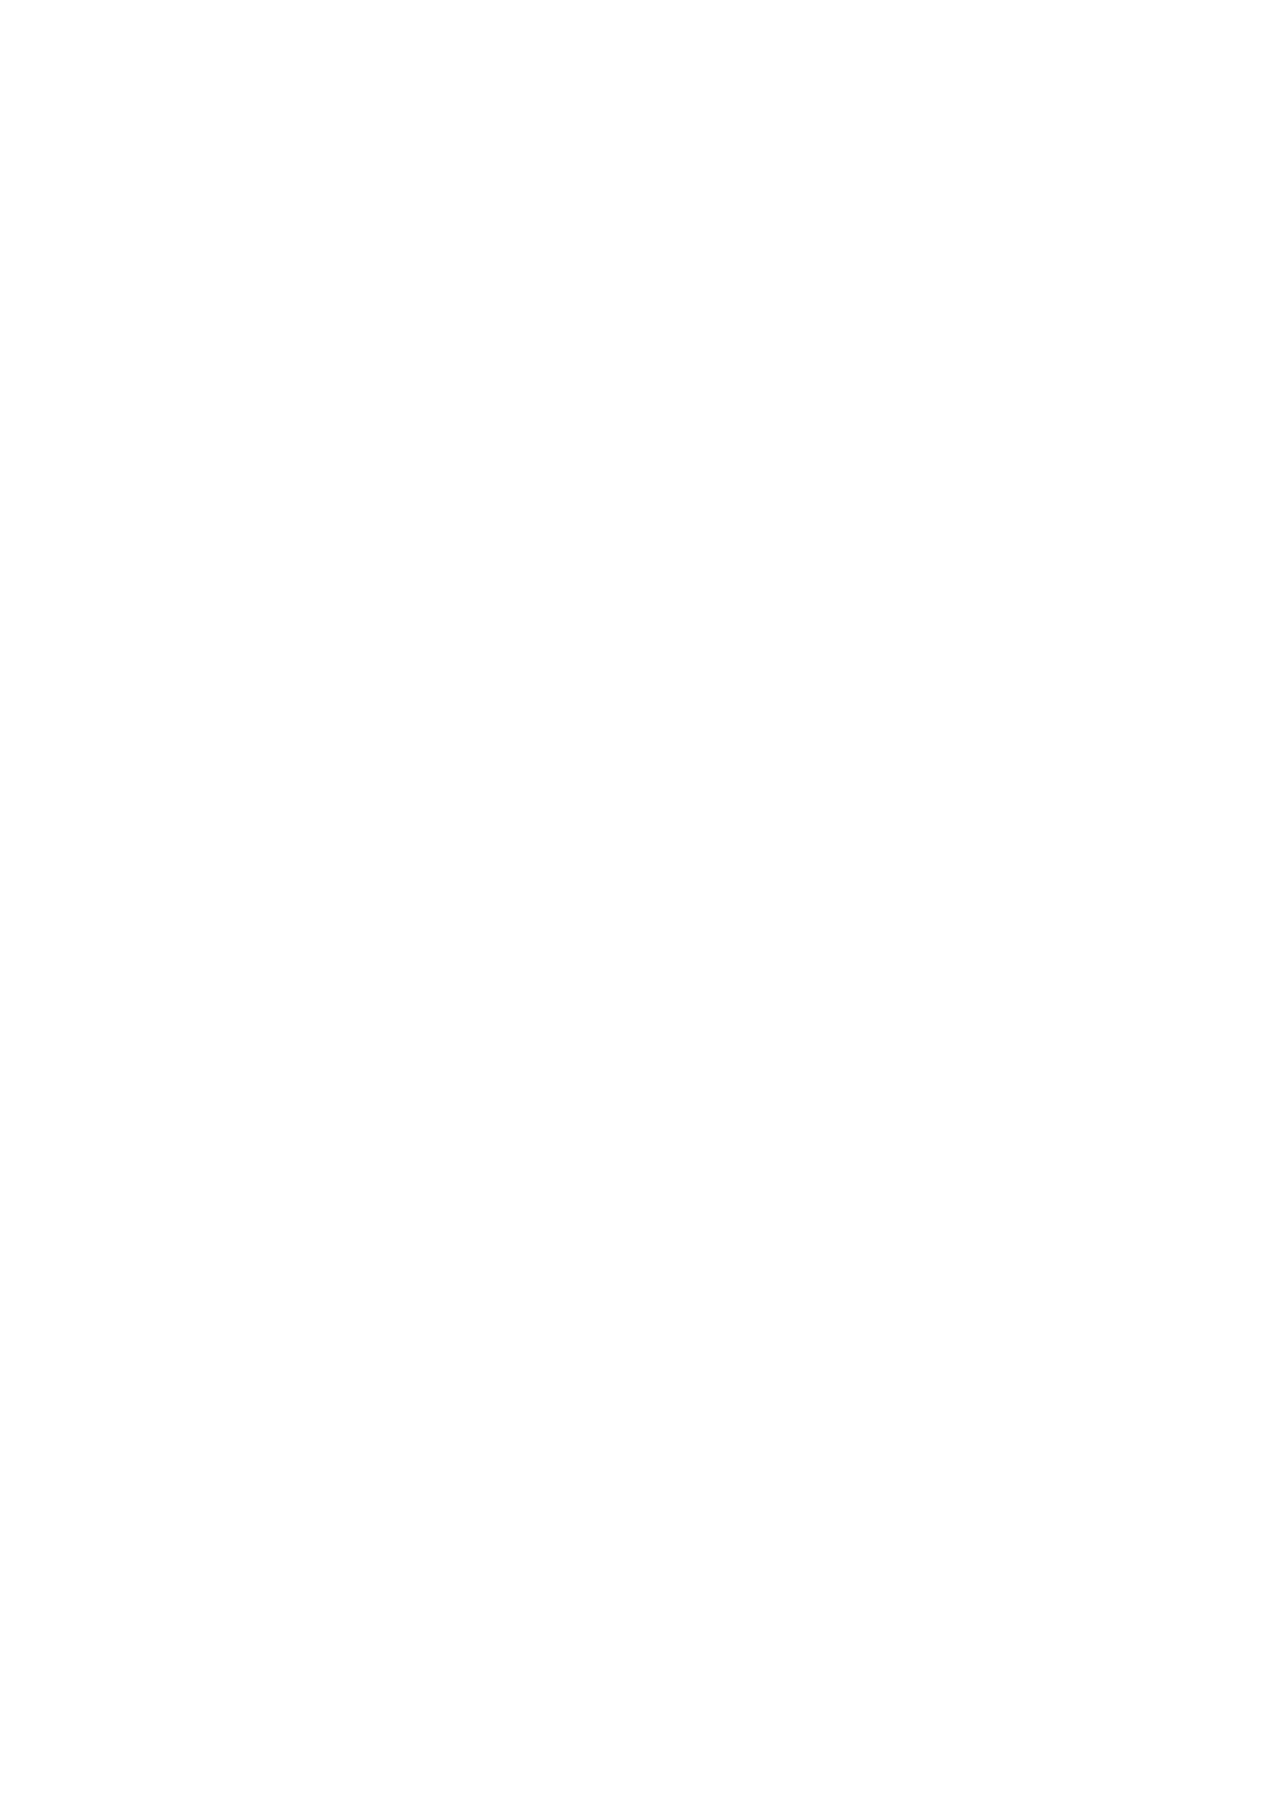 Chris.com's web page